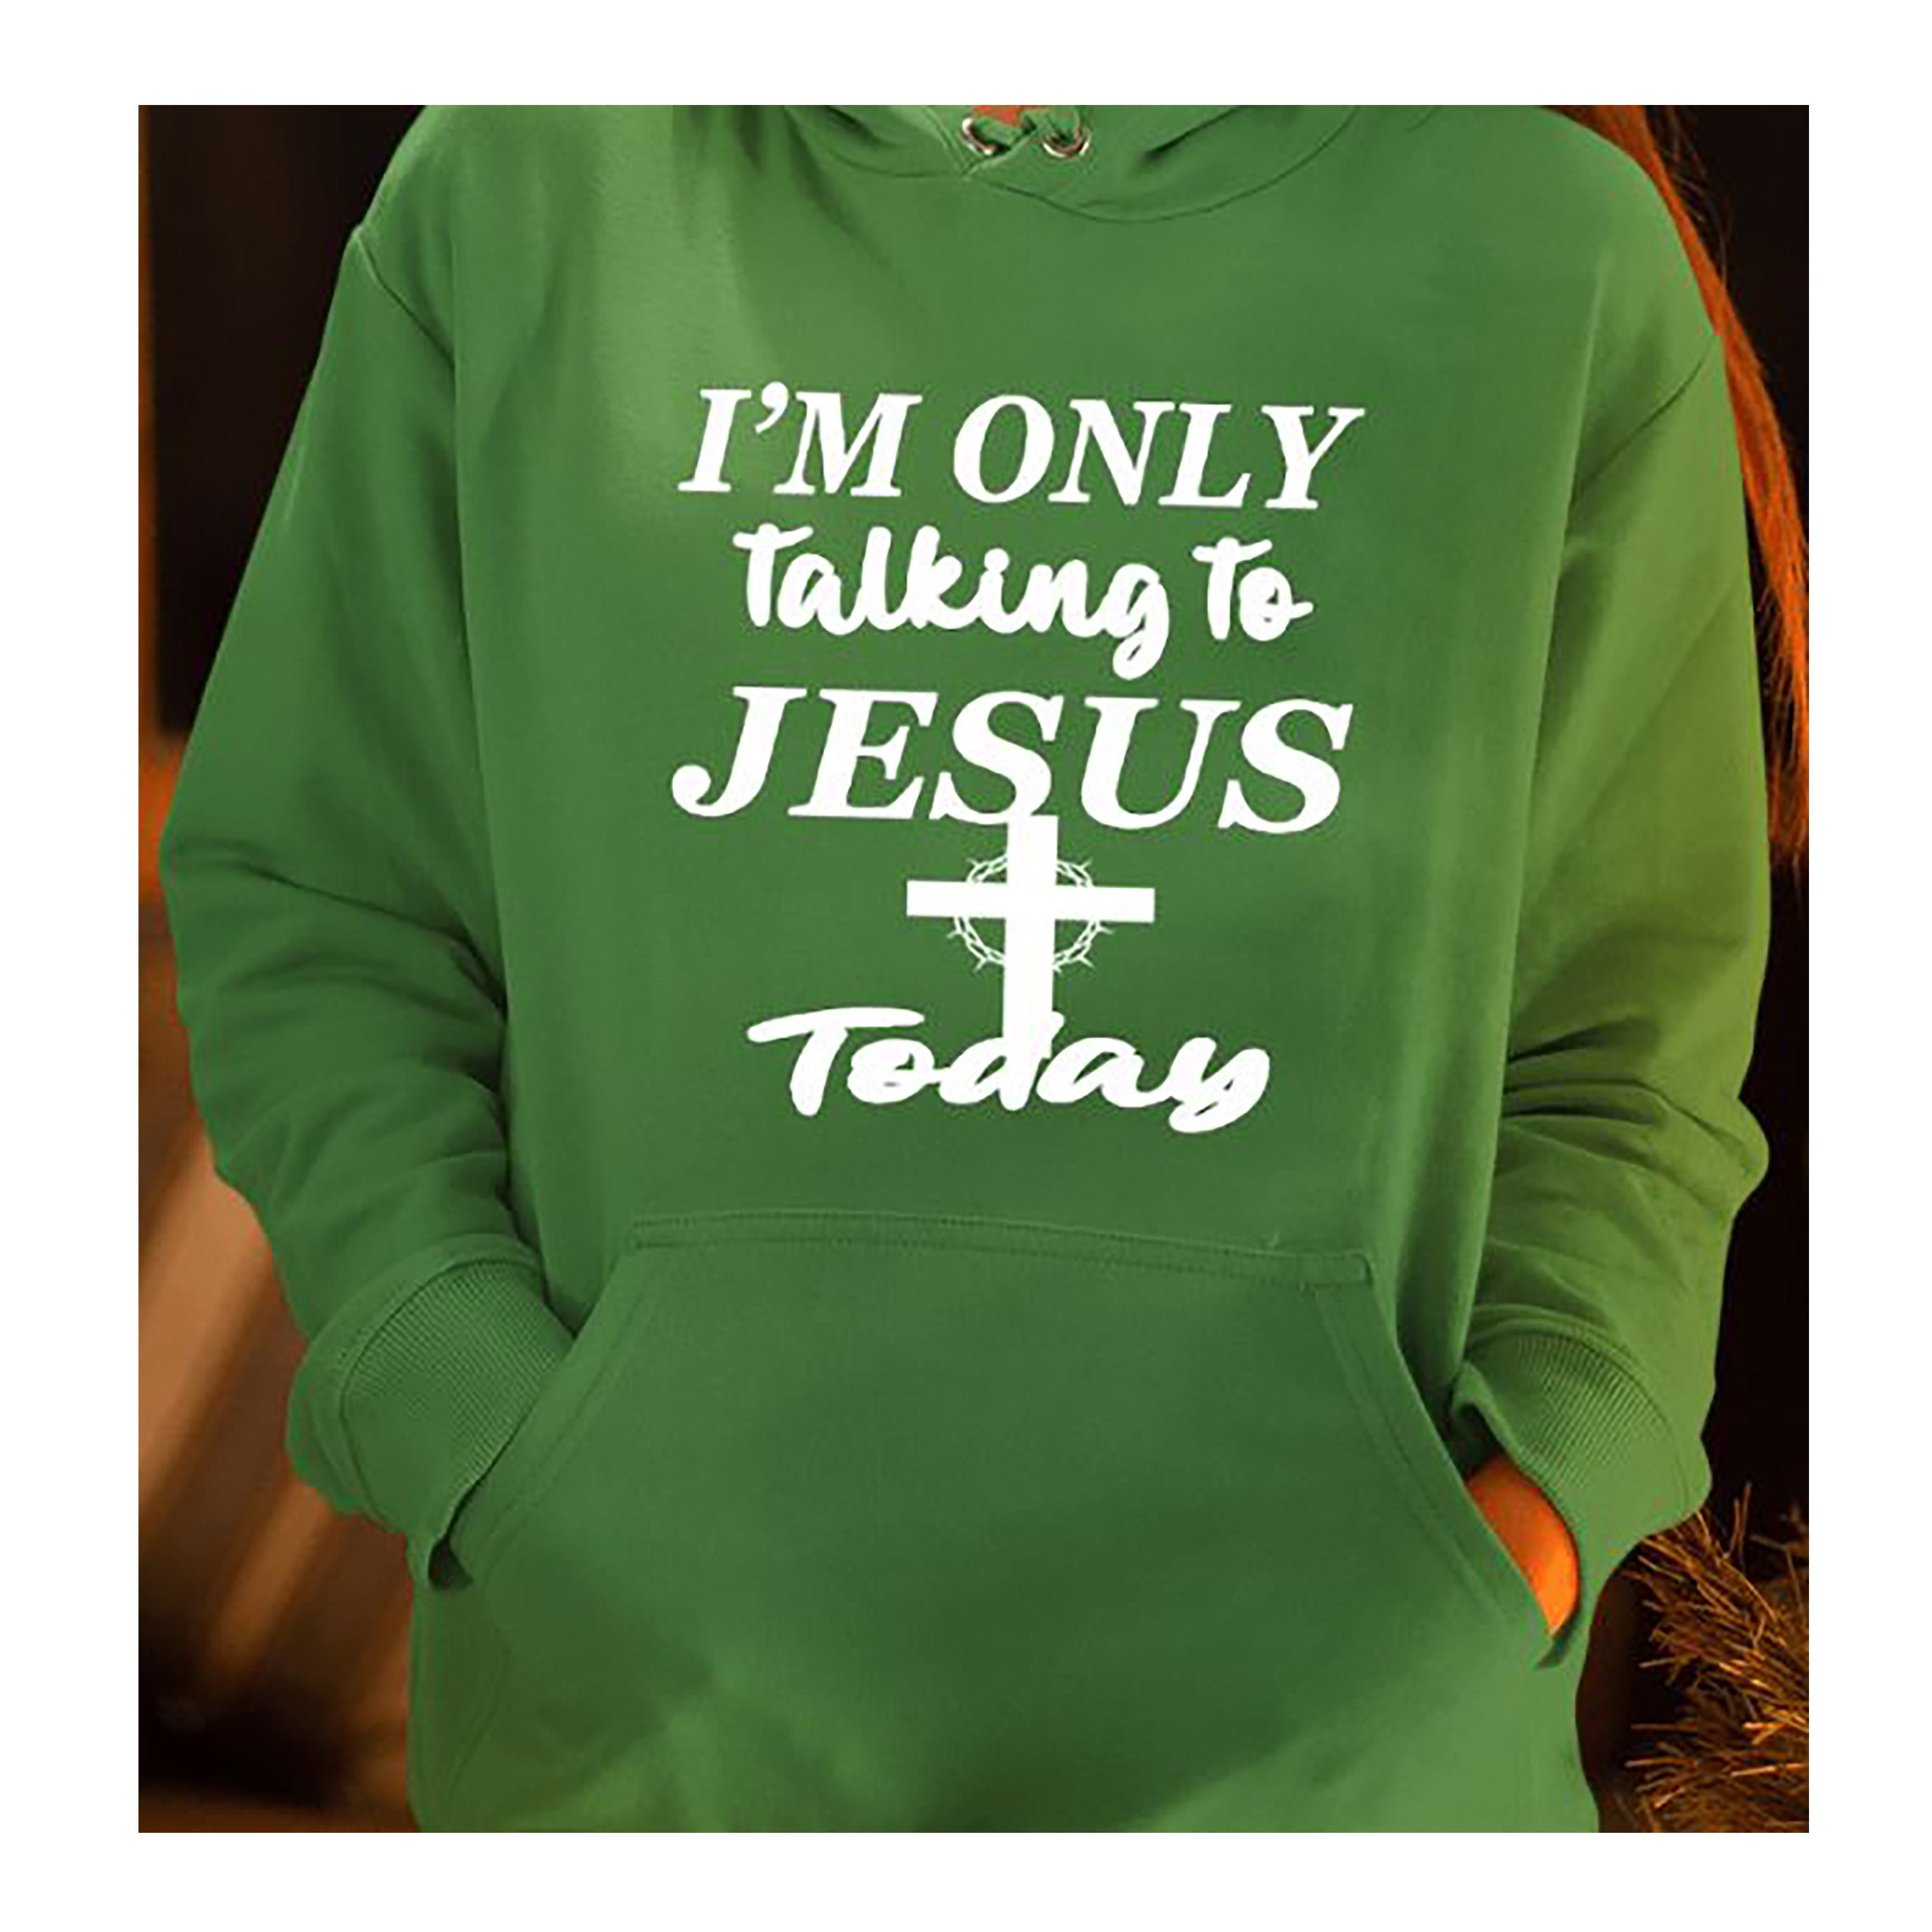 "I'M ONLY TALKING TO JESUS TODAY"- Hoodie & Sweatshirt.